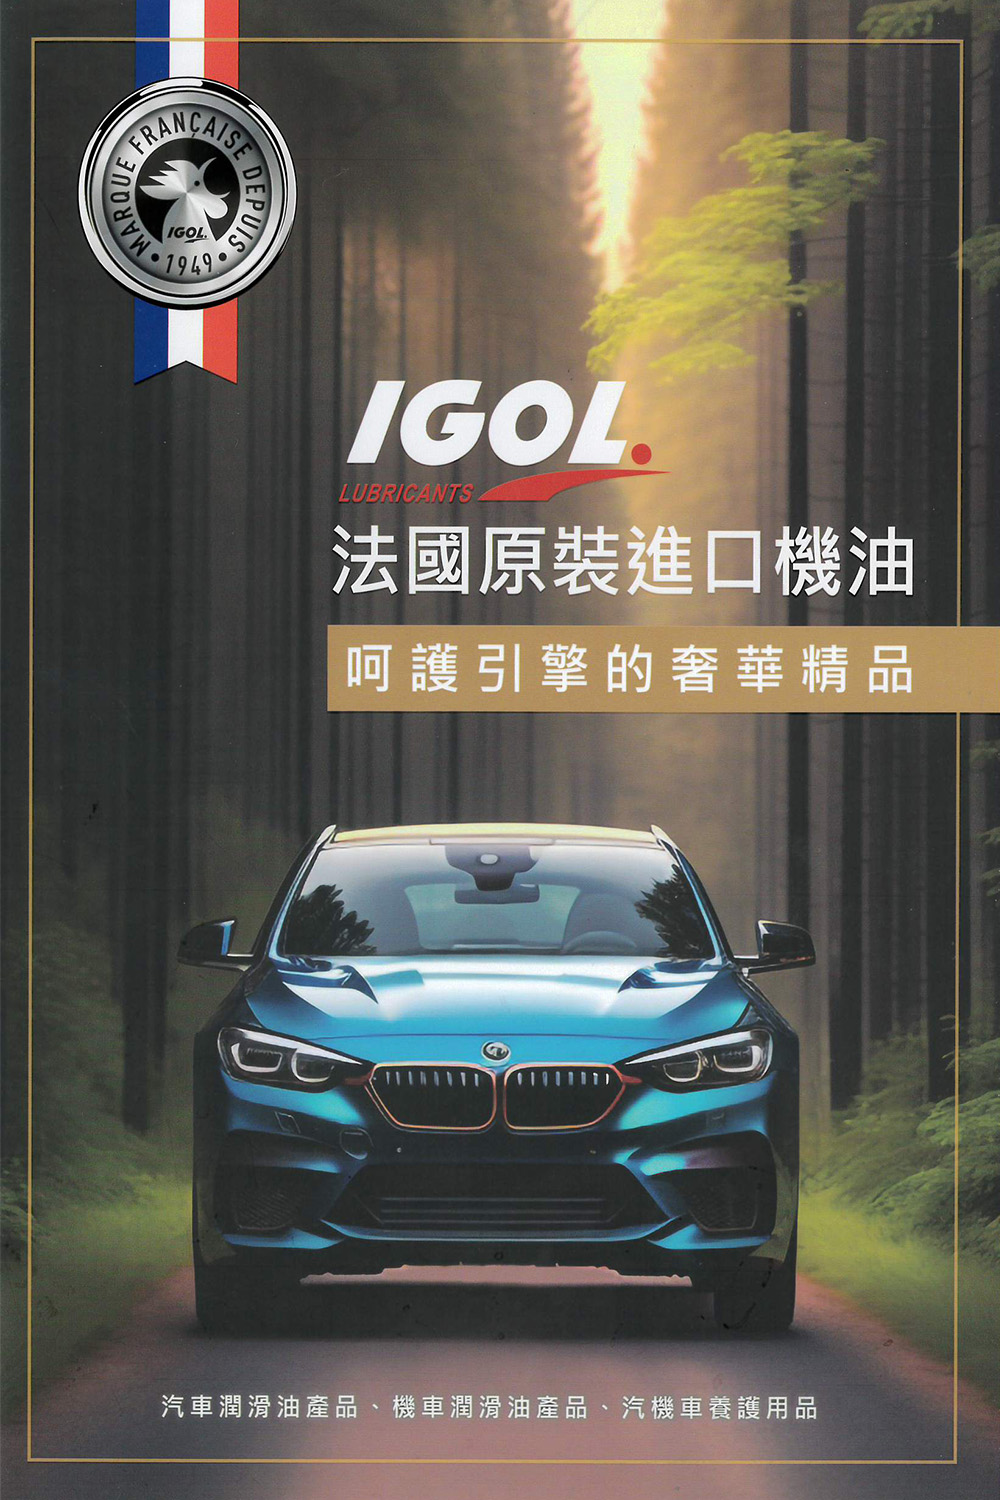 IGOL法國原裝進口機油 NET FREINS 煞車清潔劑(